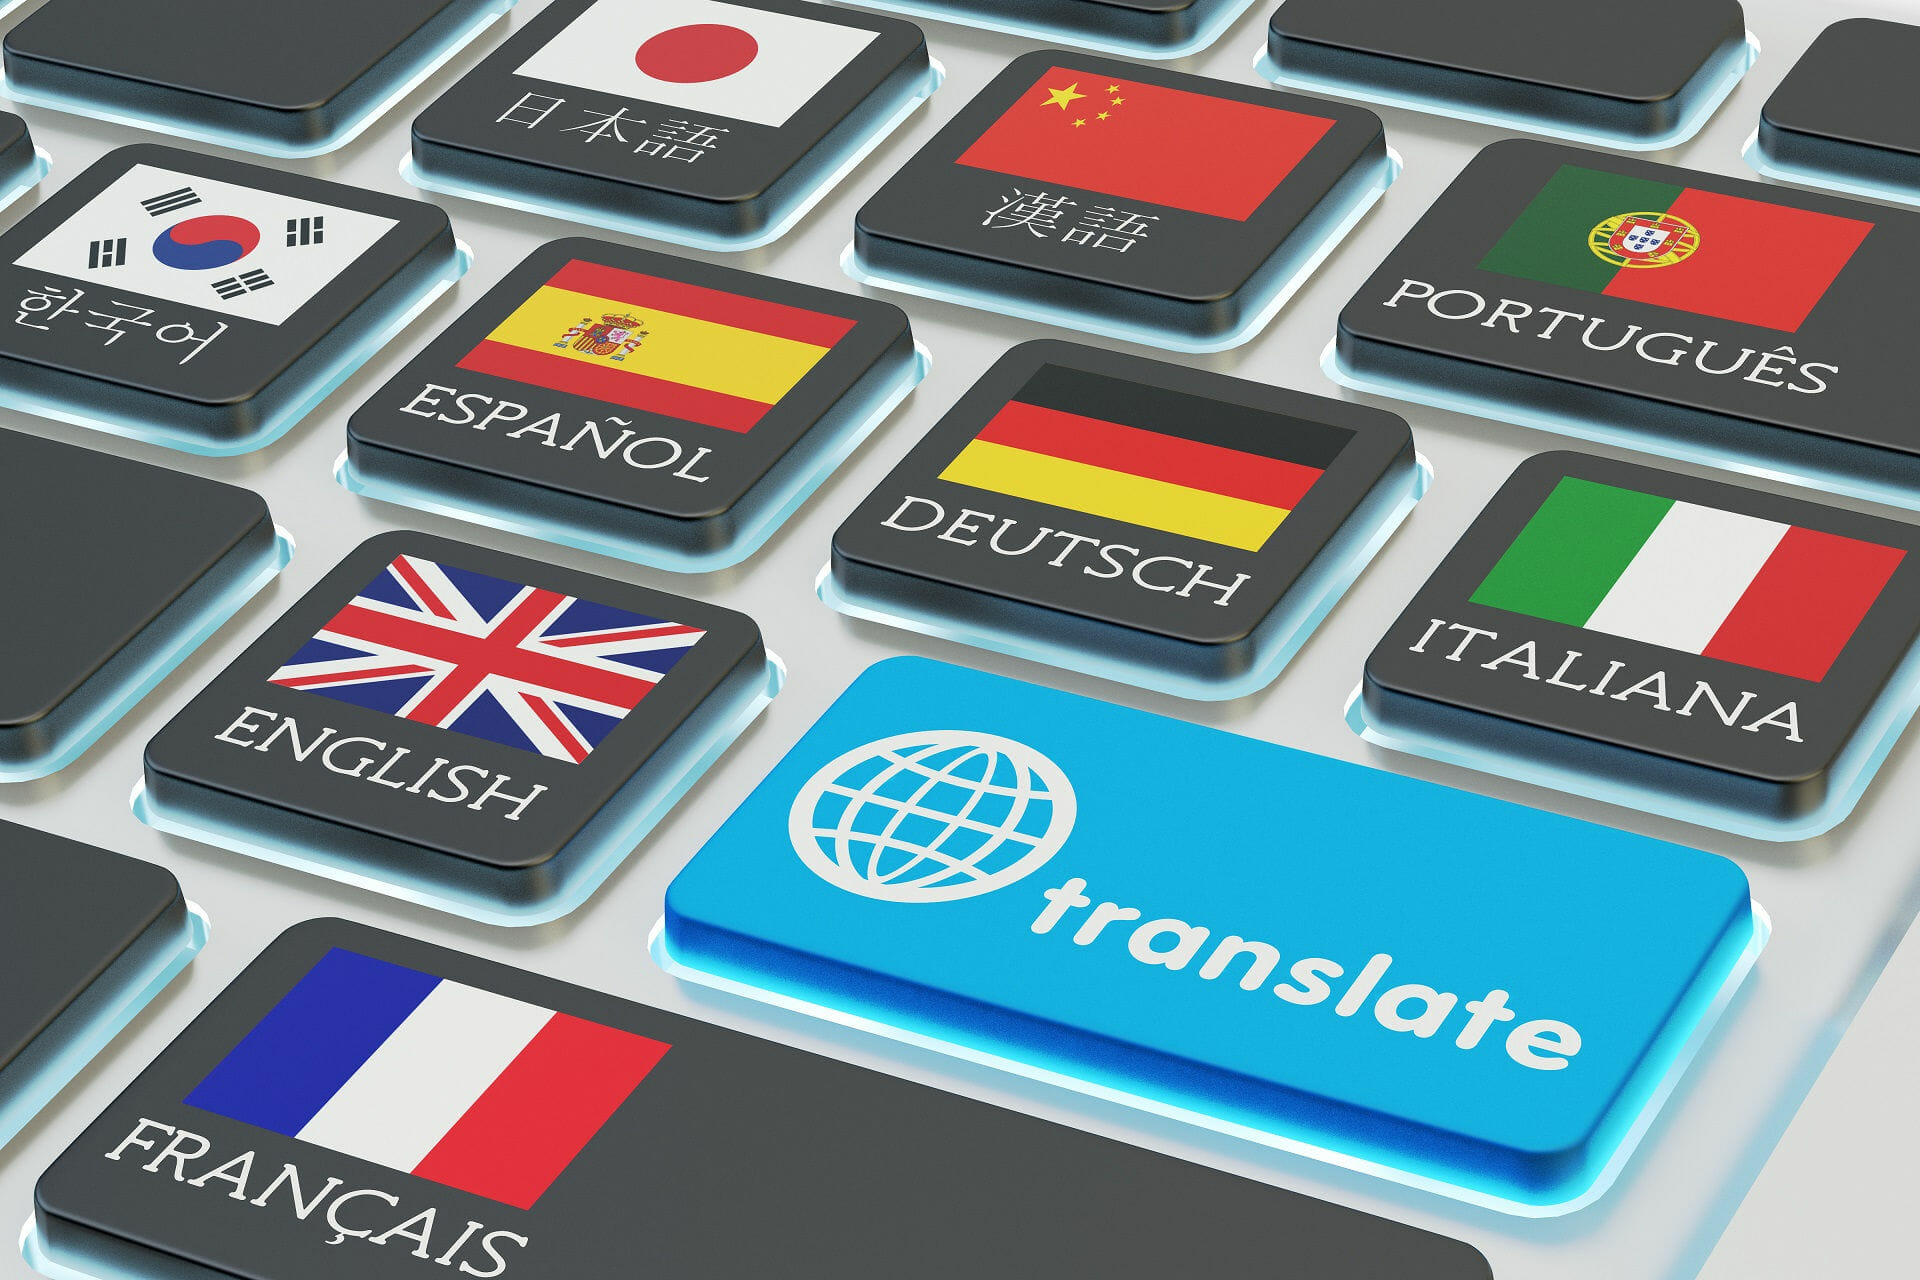 Microsoft Custom Translator v2 helps you globalize your business